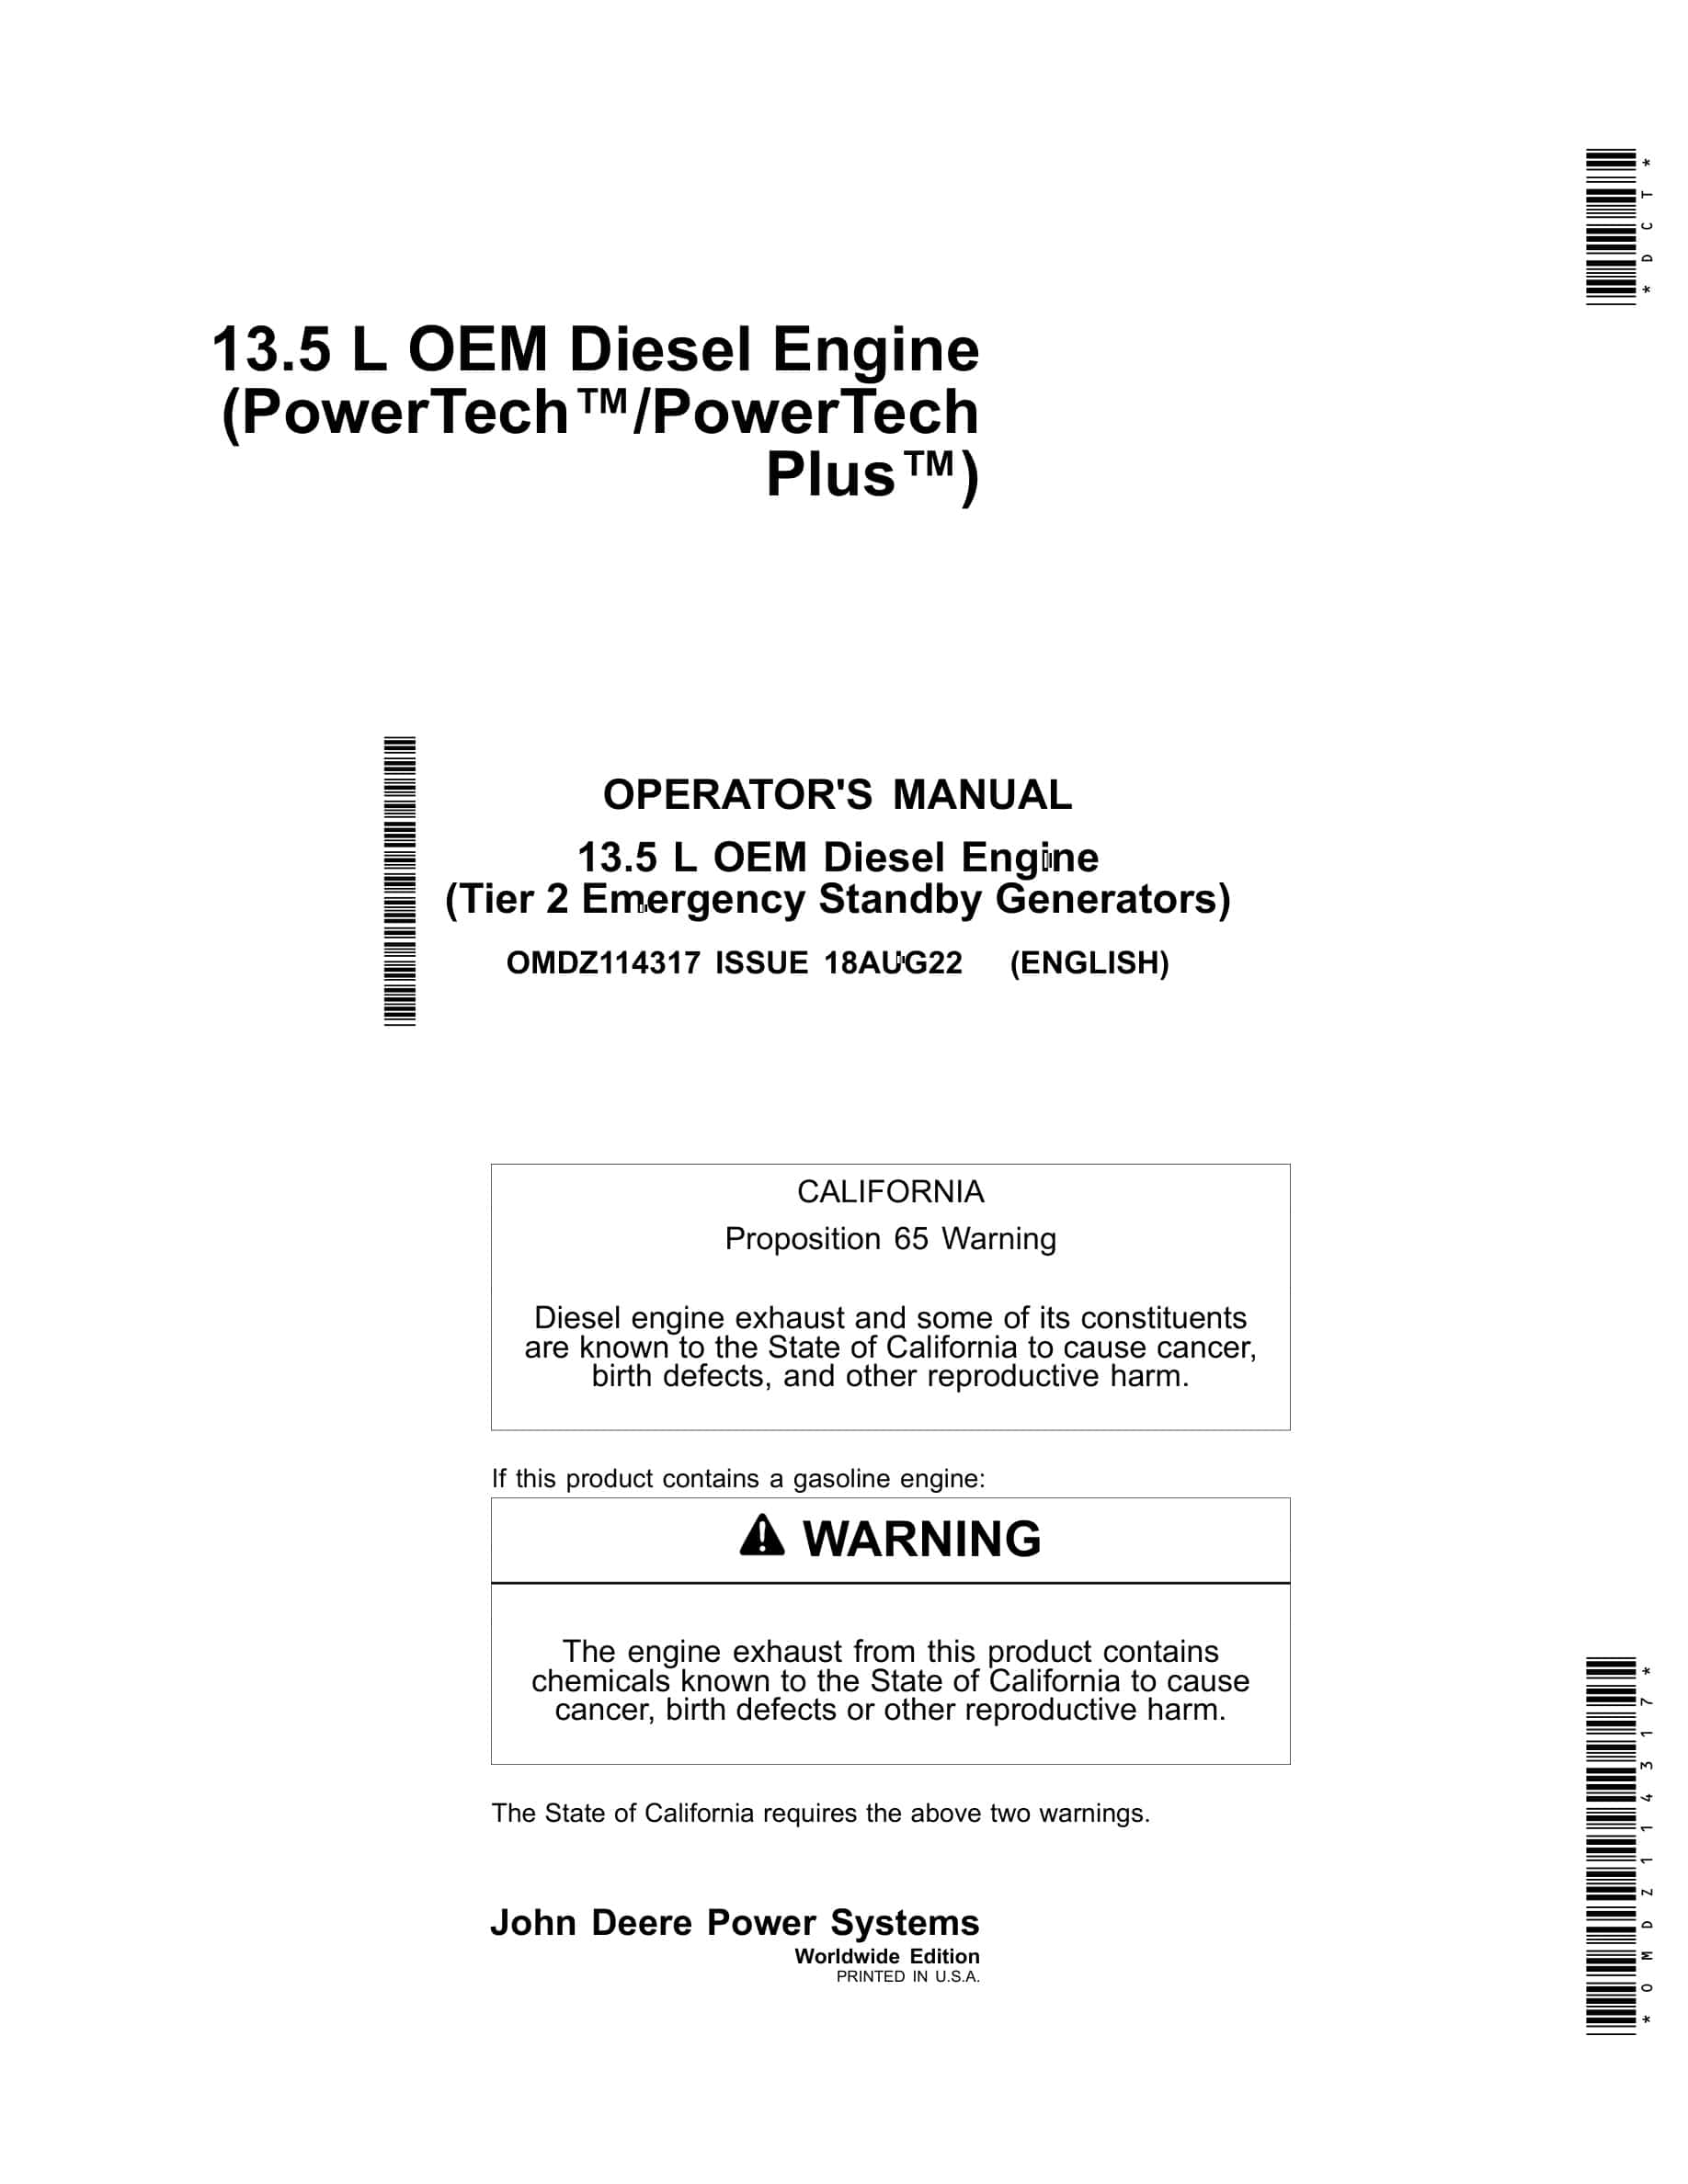 John Deere PowerTech 13.5 L OEM Diesel Engine Operator Manual OMDZ114317-1